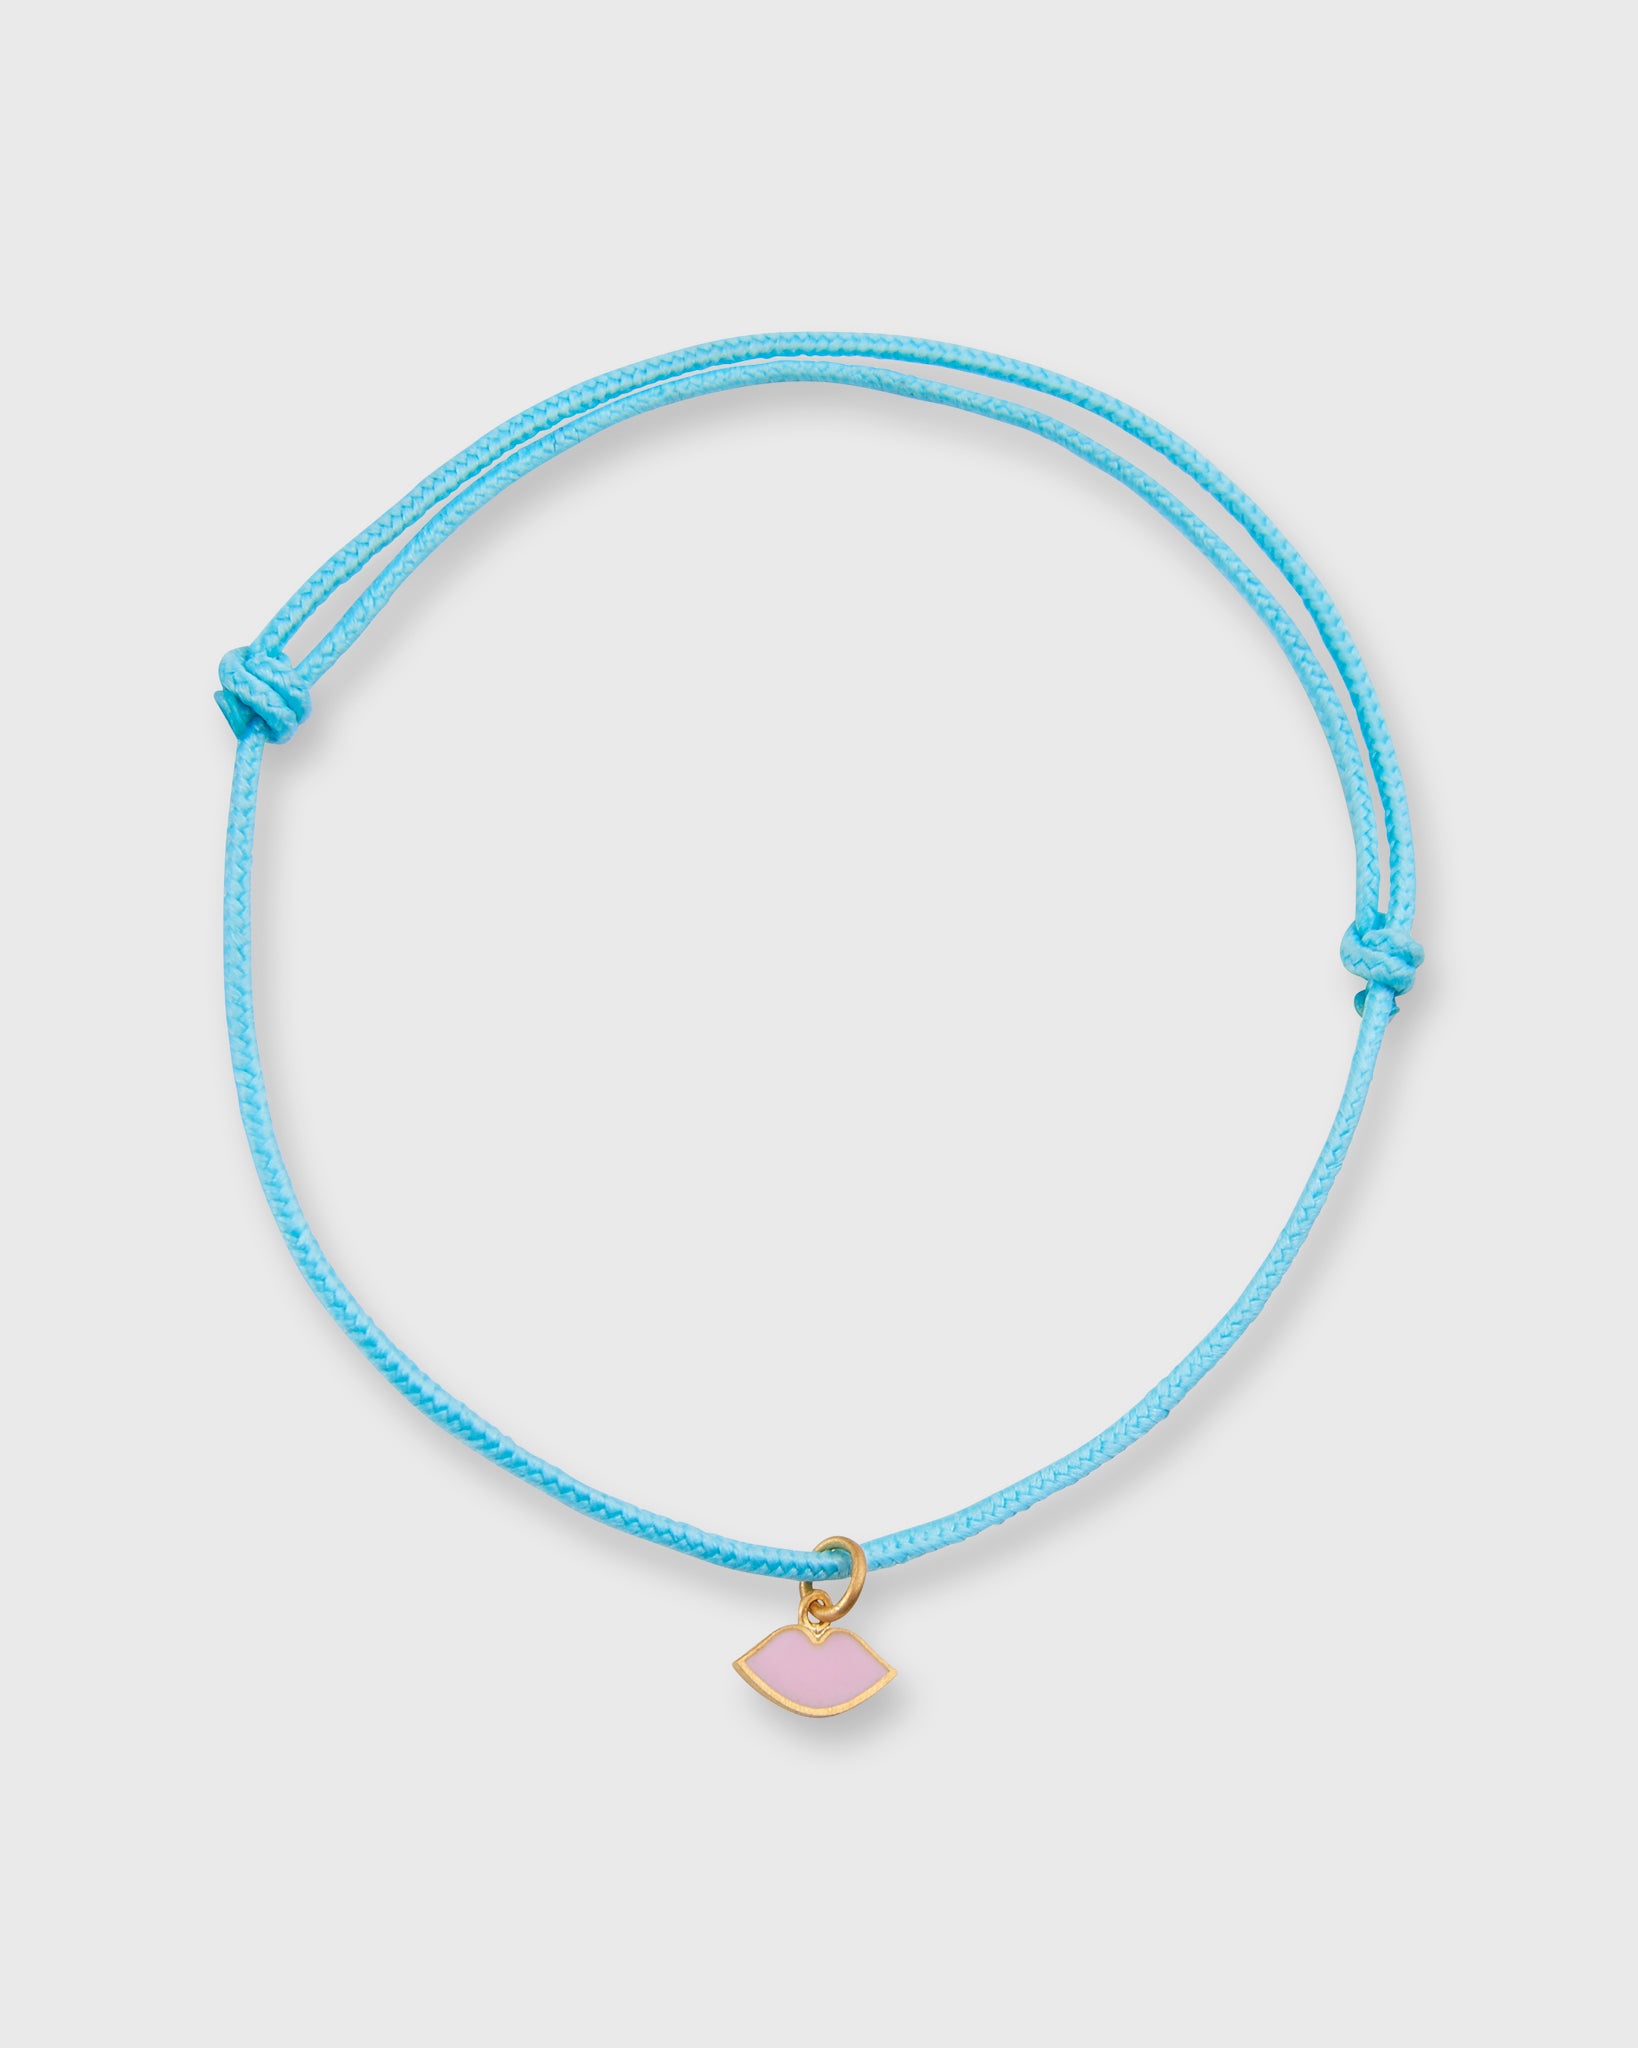 Kiss Charm Bracelet in Pink Enamel/Turquoise Cord